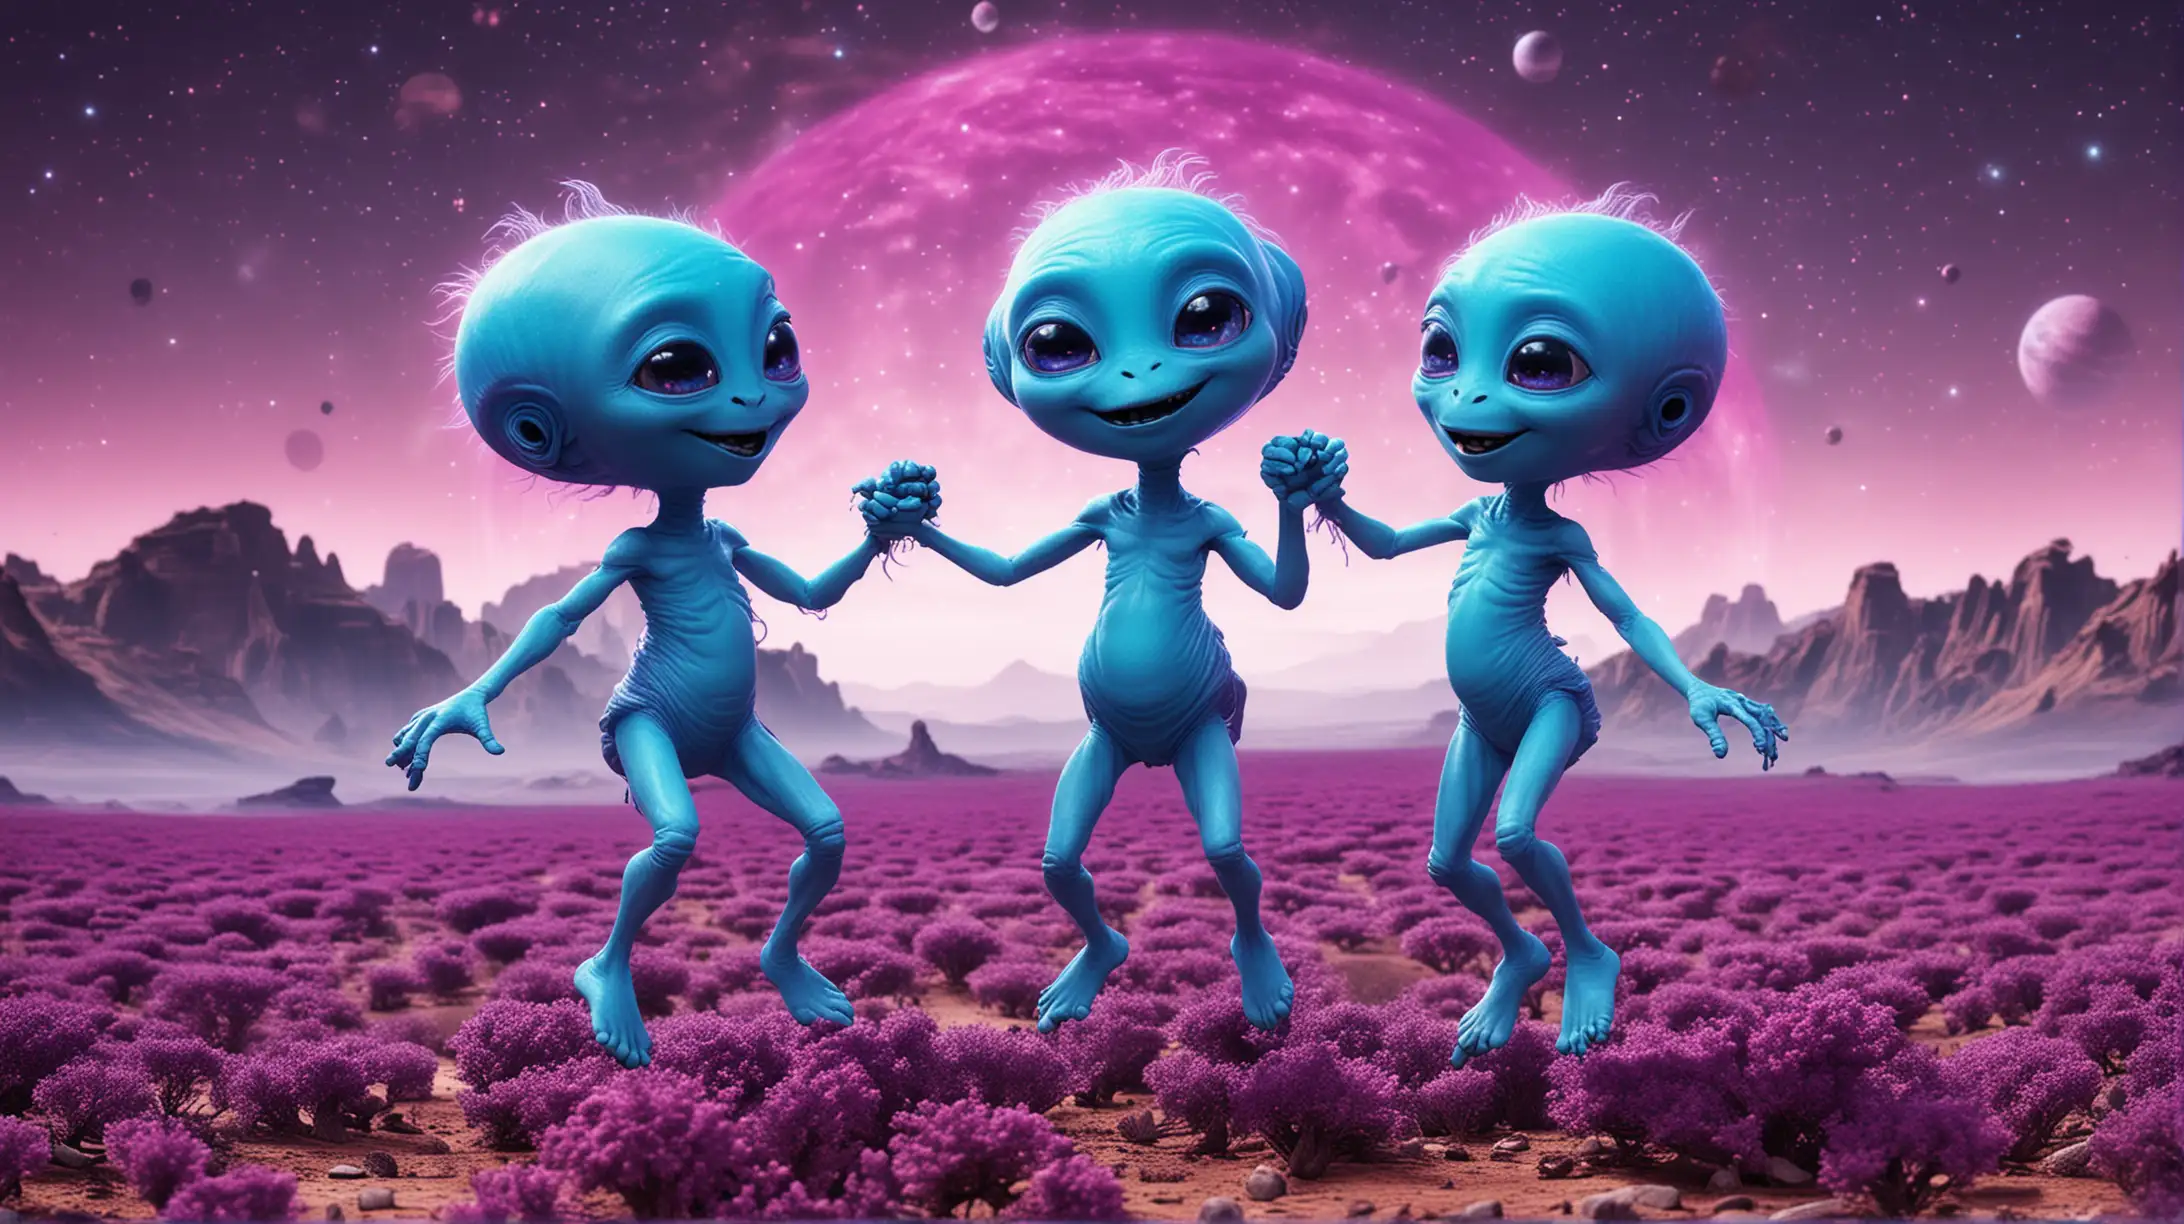 Two happy blue aliens dancing on a purple planet